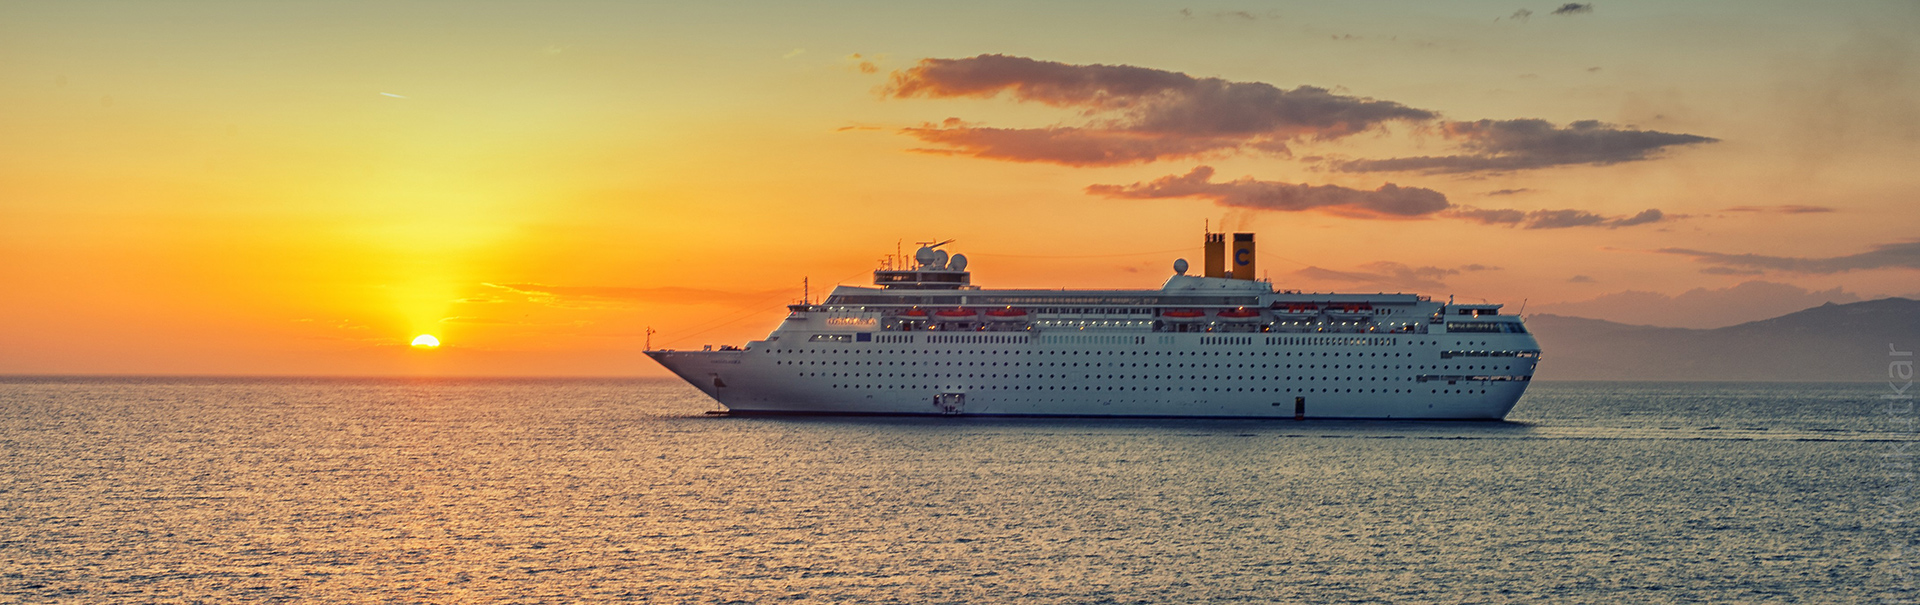 Mykonos Cruise Ships 2020